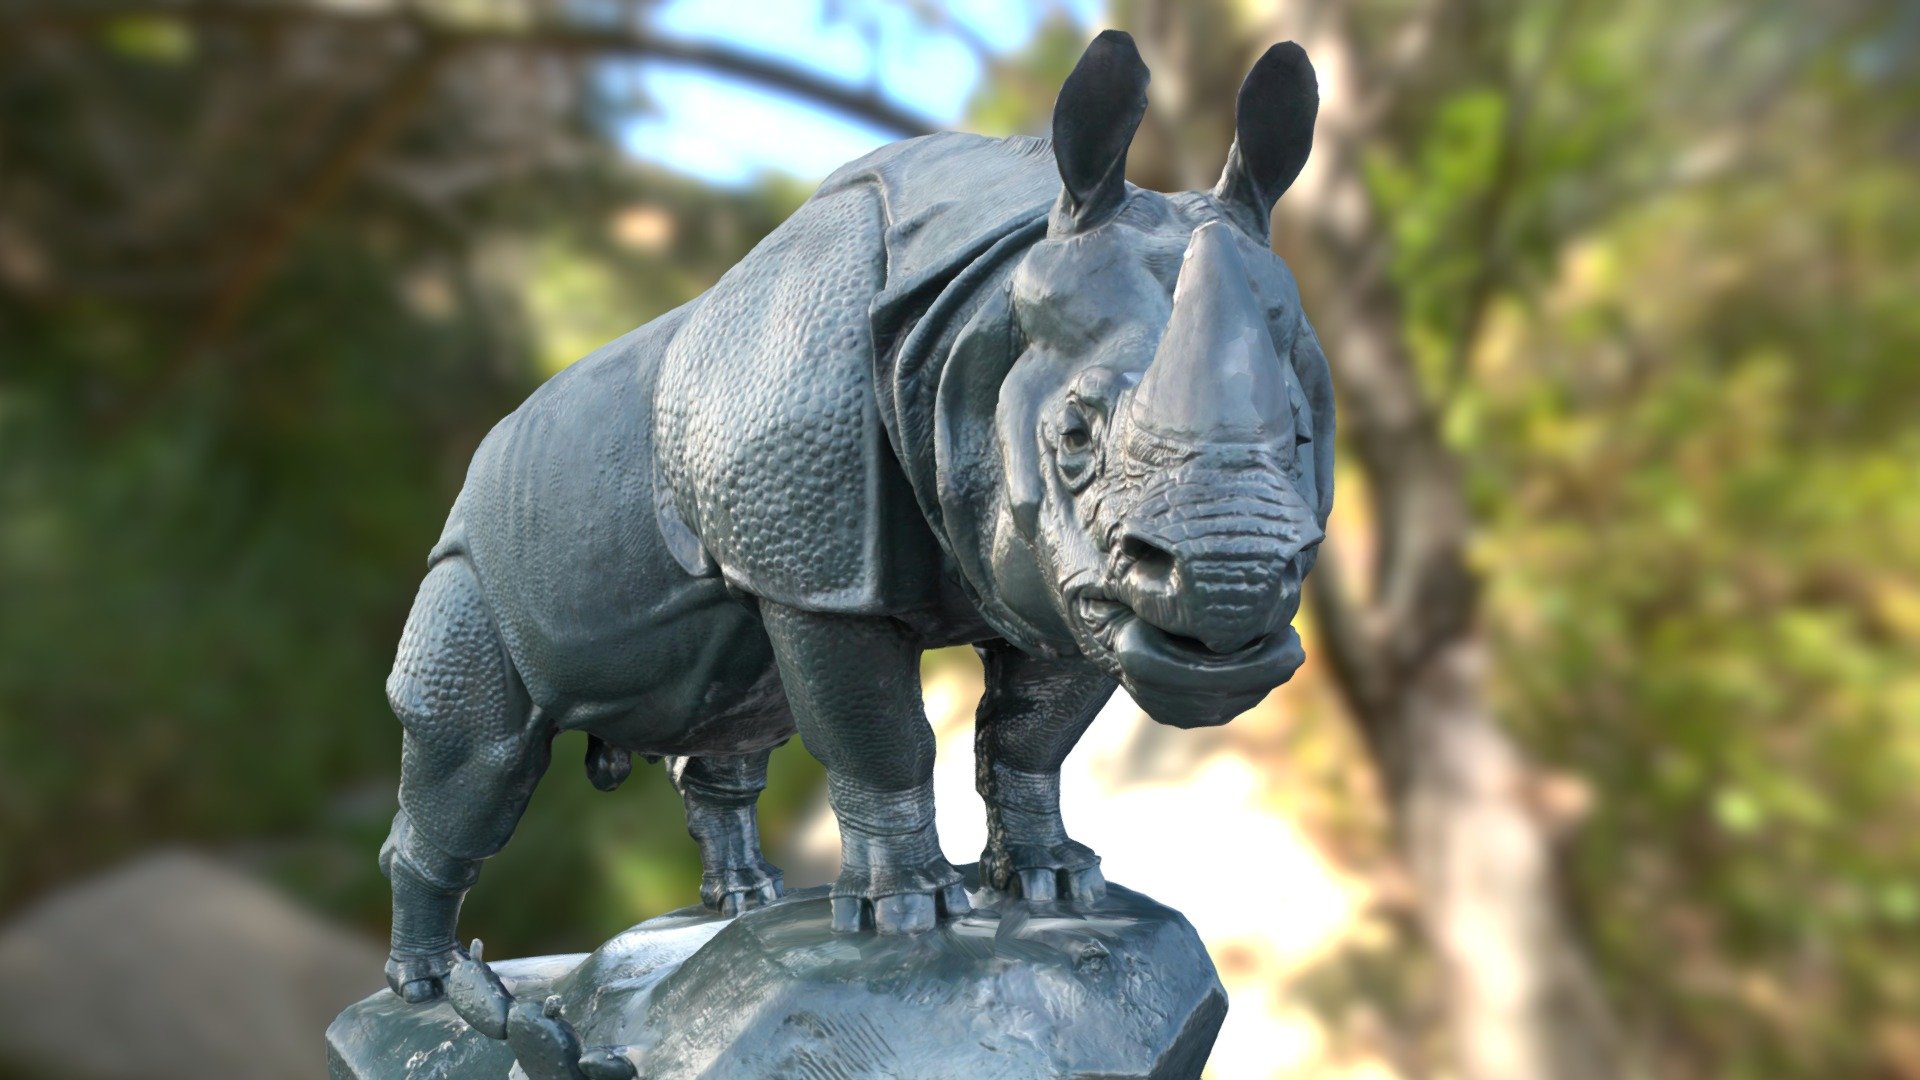 3dm rhino models free download